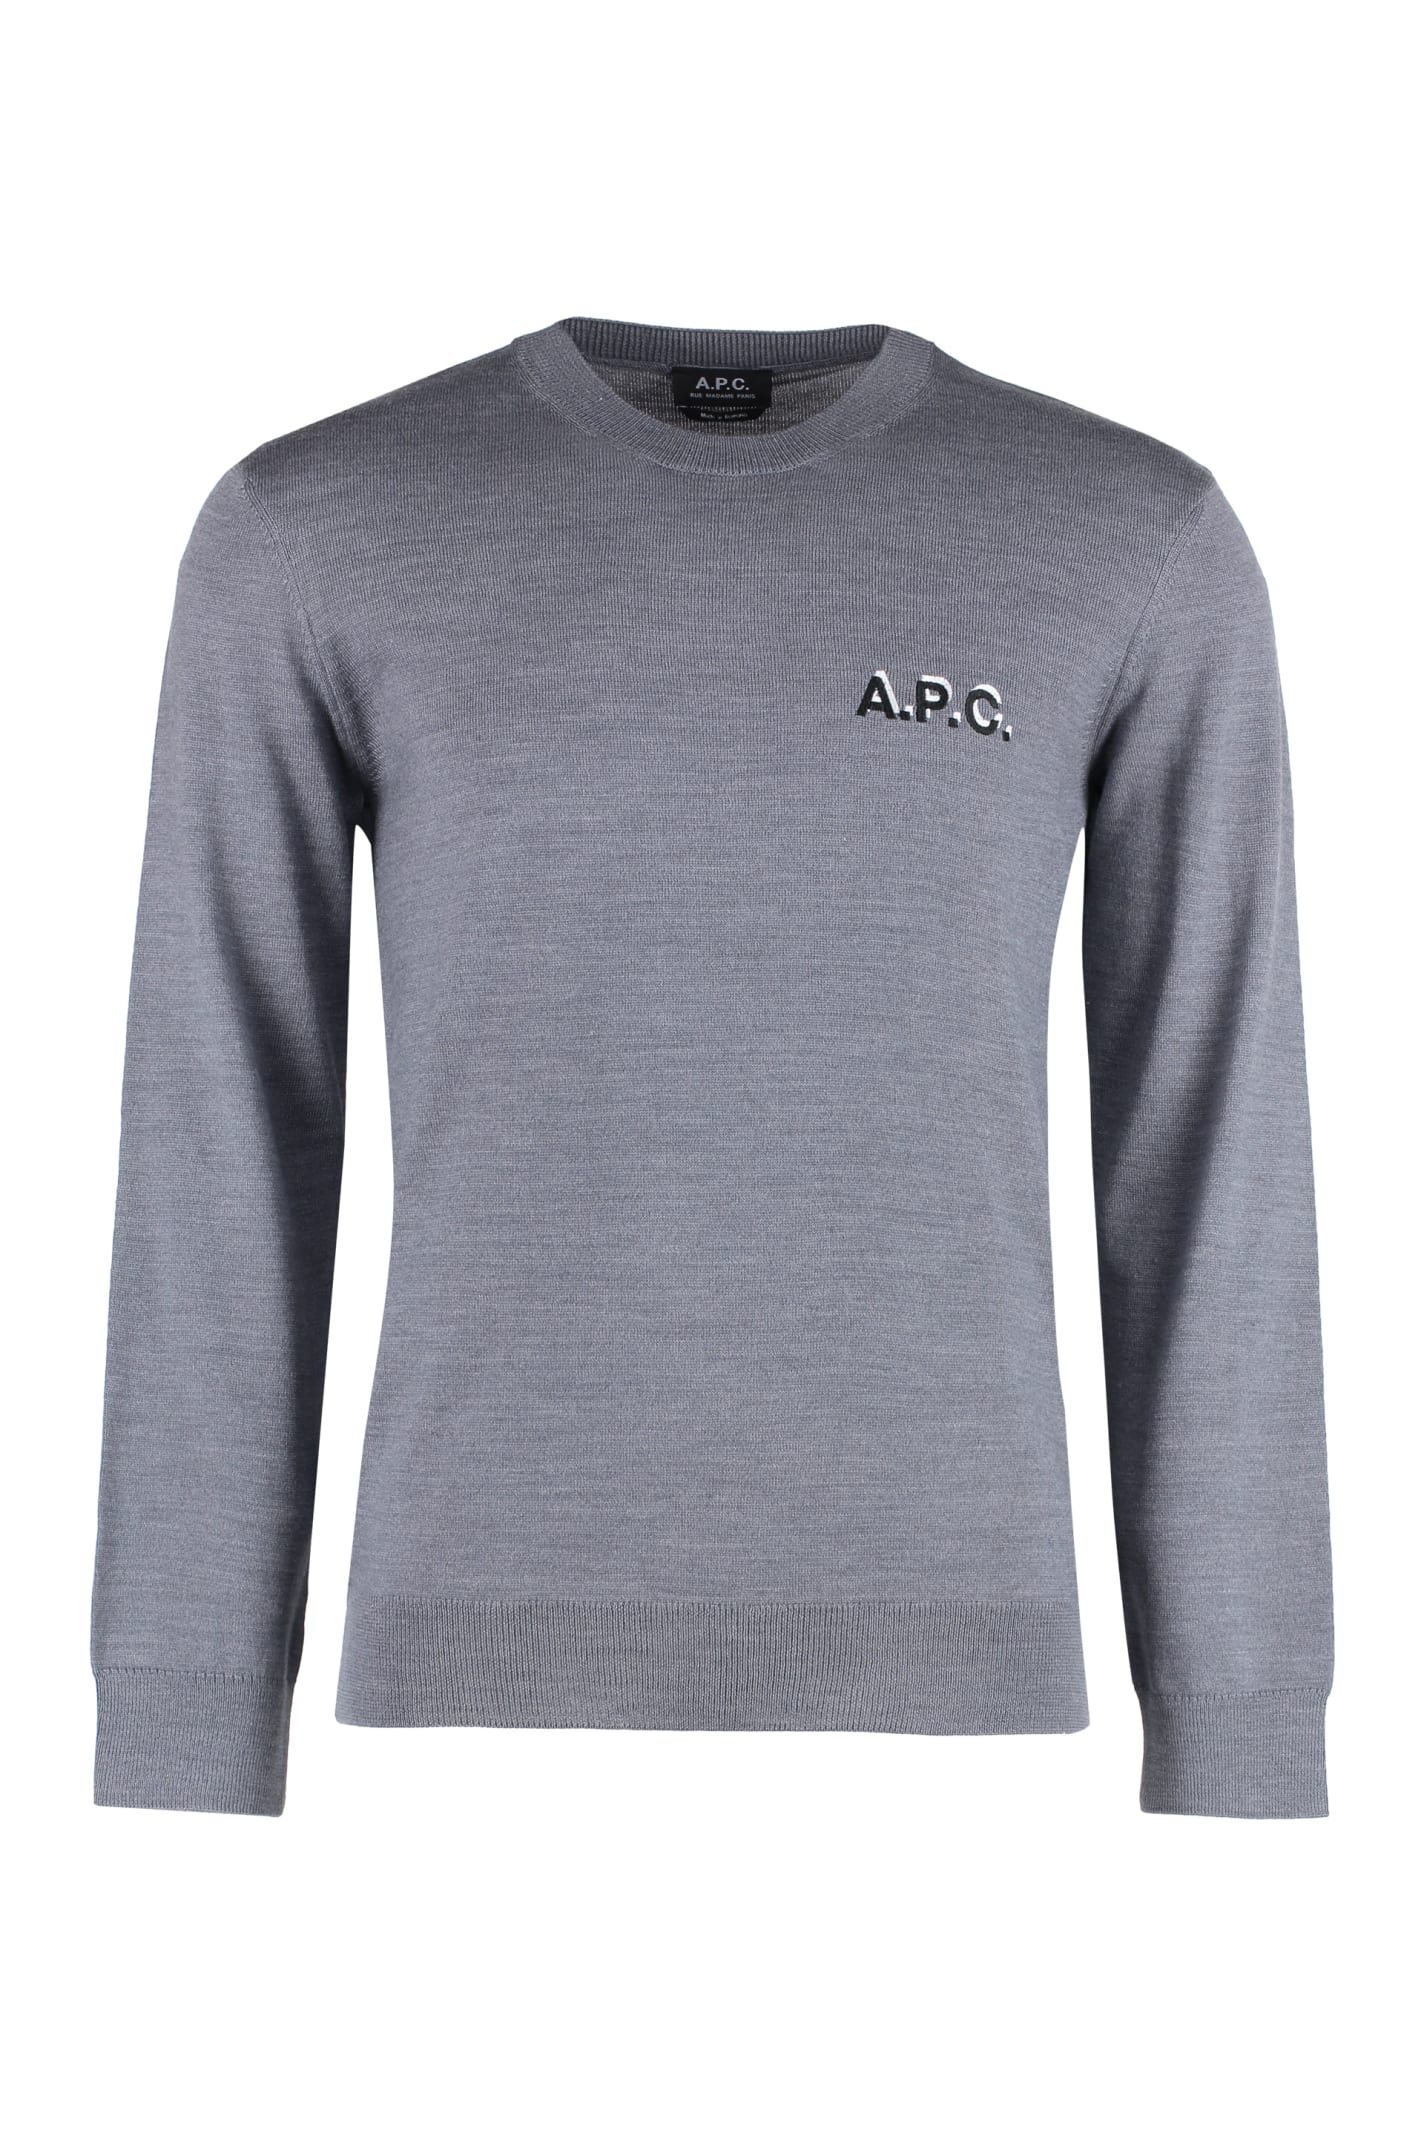 A.P.C. Brian Wool Crew-neck Sweater